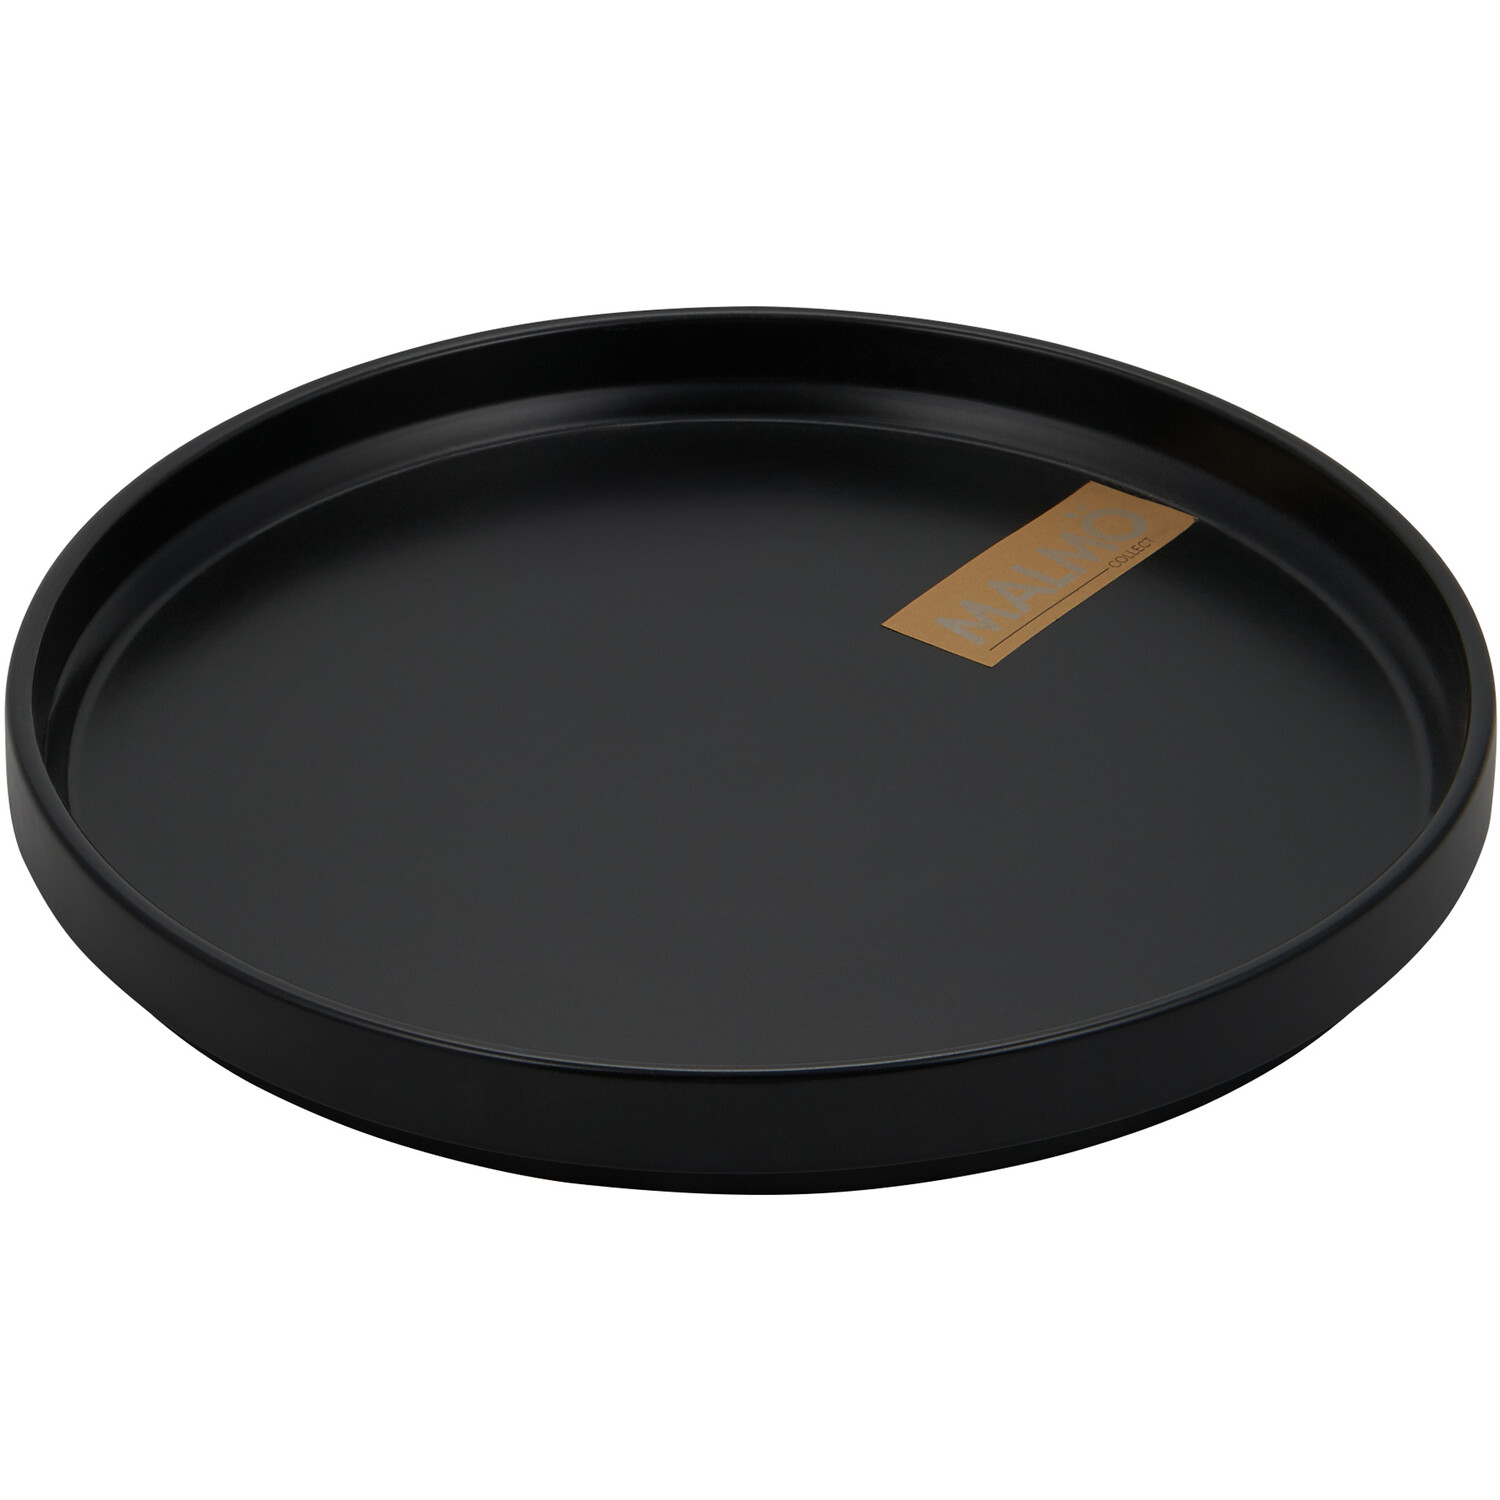 Malmo Stacking Dinner Plate - Black Image 1